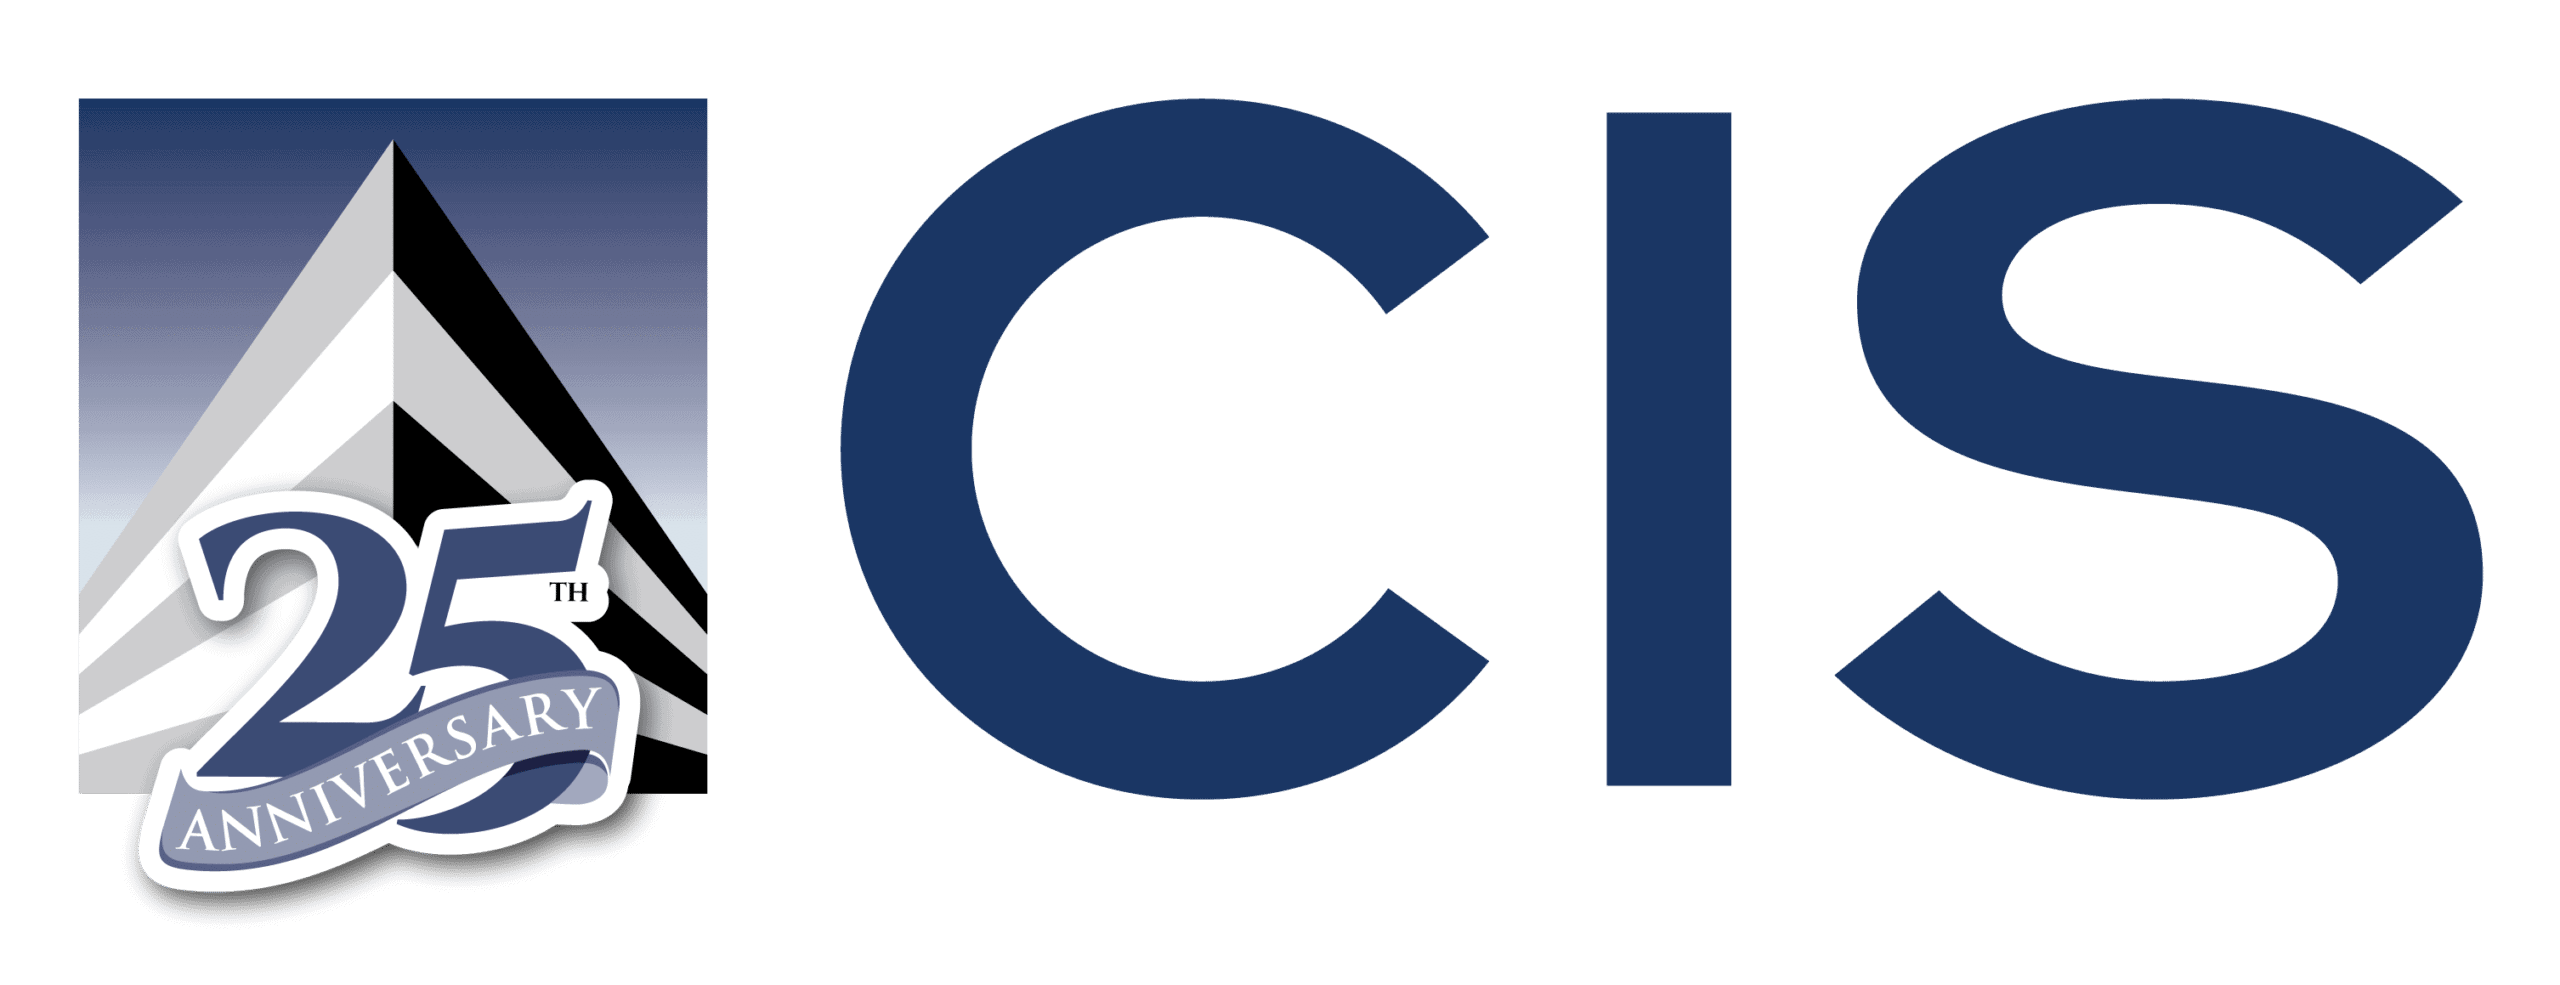 CI Services